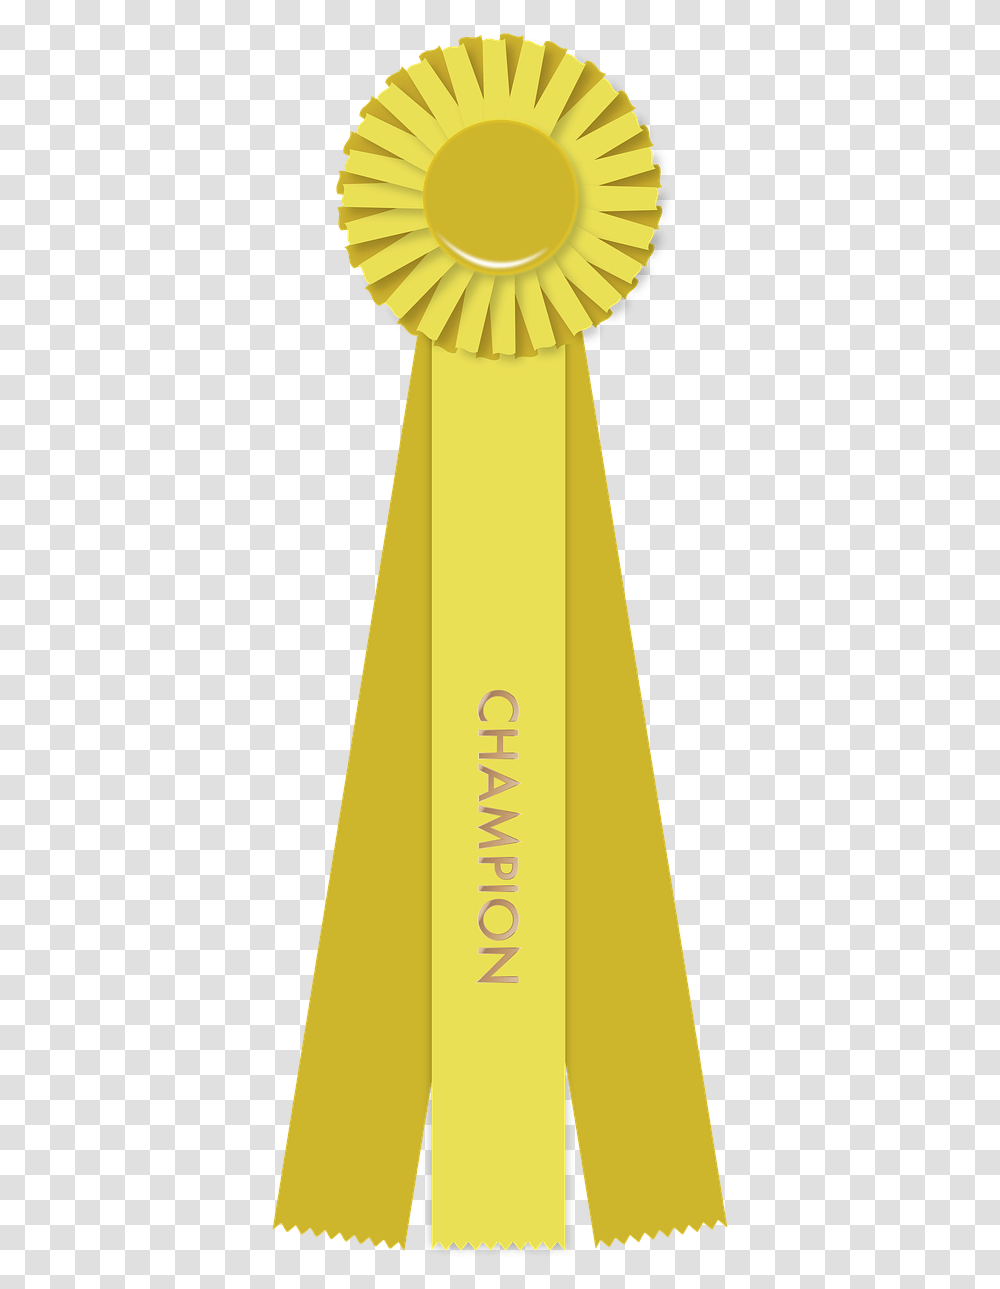 Yellow Ribbon Champion Winner Free Image On Pixabay Ribbon Champion, Tie, Accessories, Metropolis, Urban Transparent Png